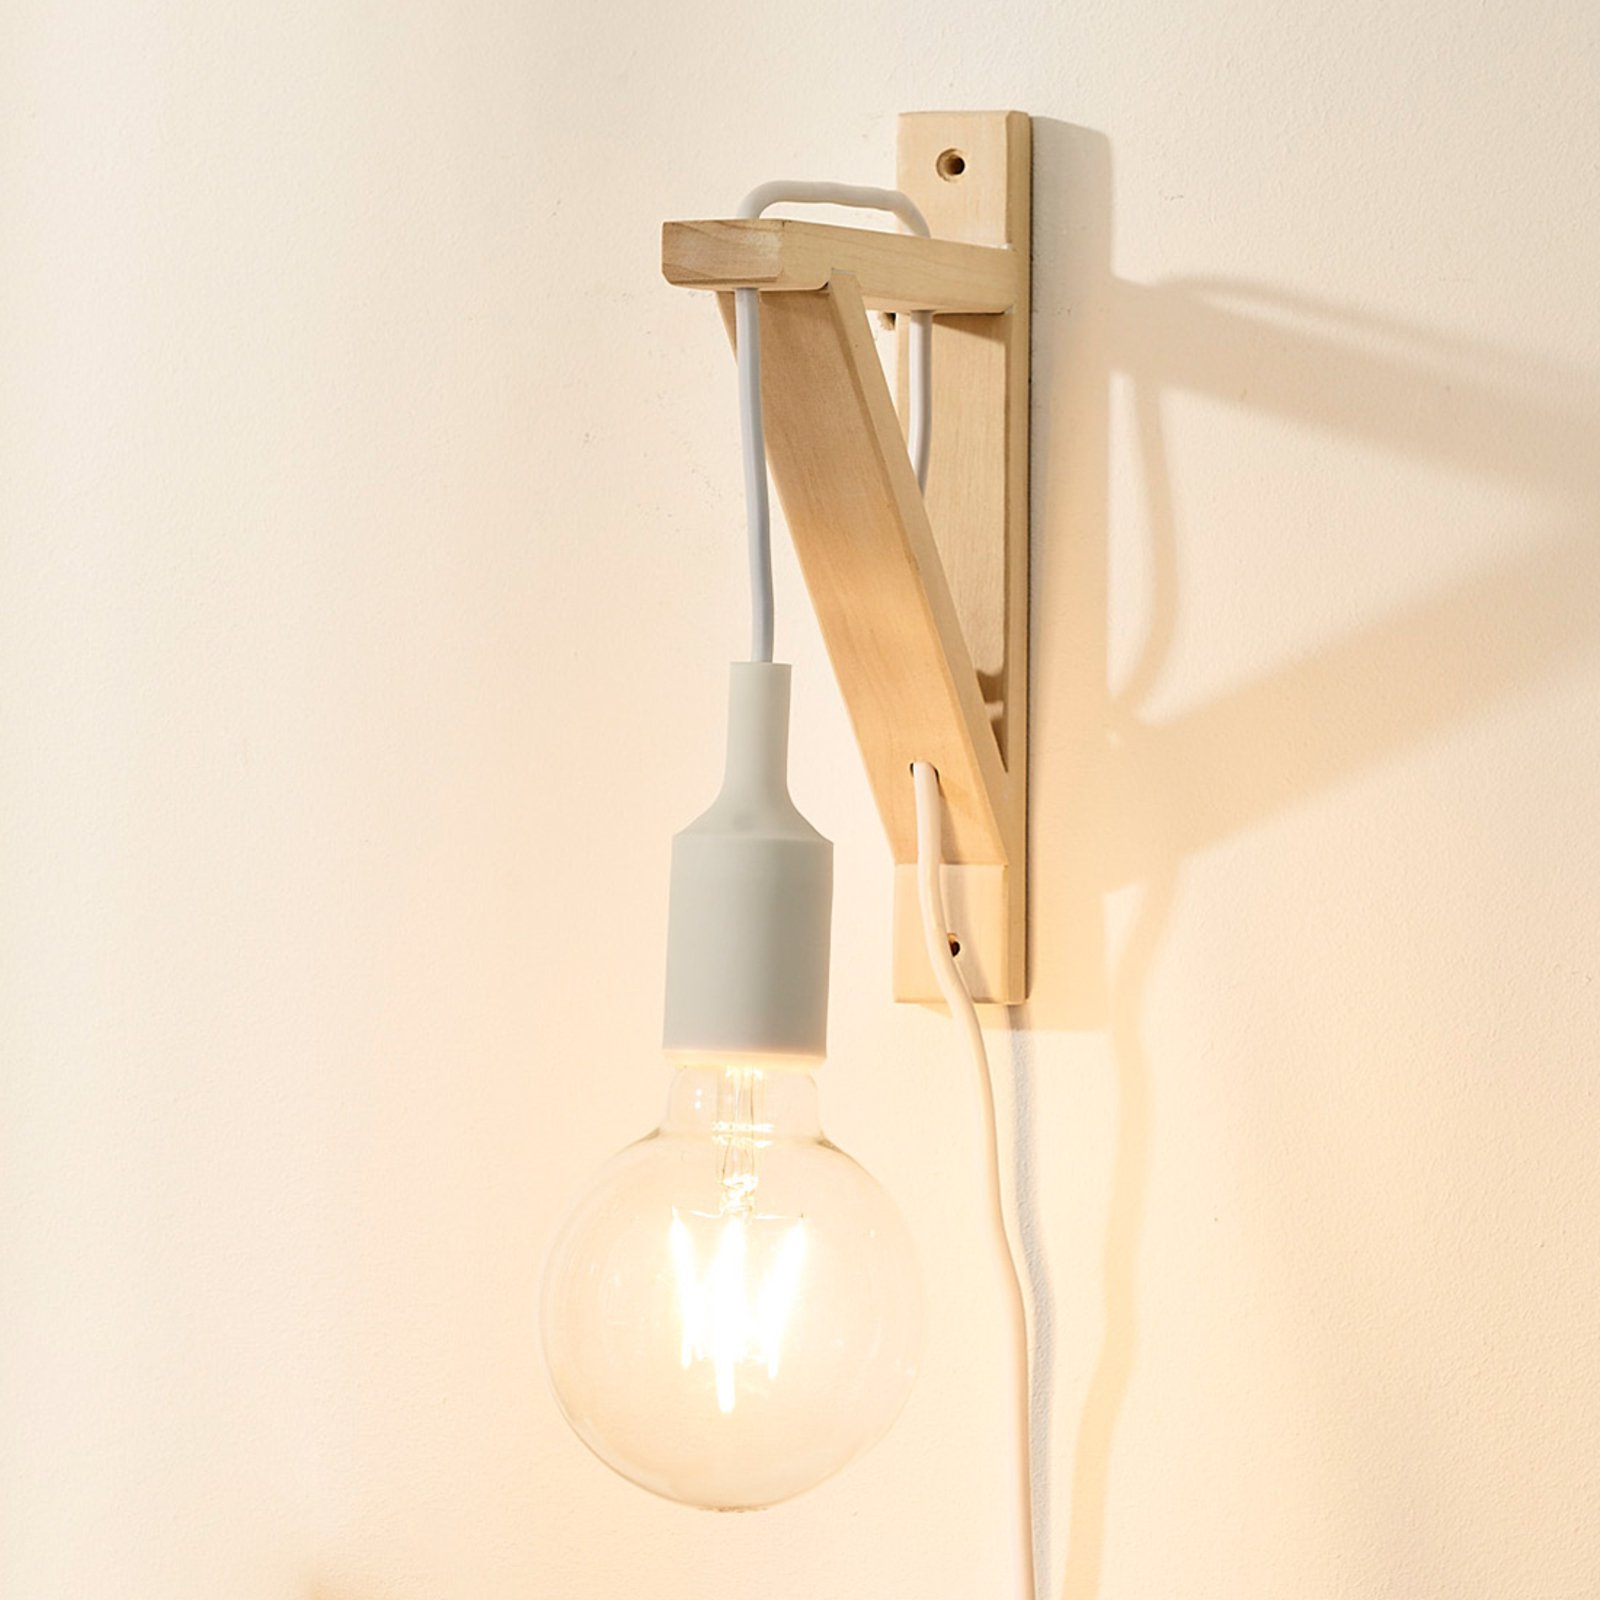 Fix wooden wall light, white socket